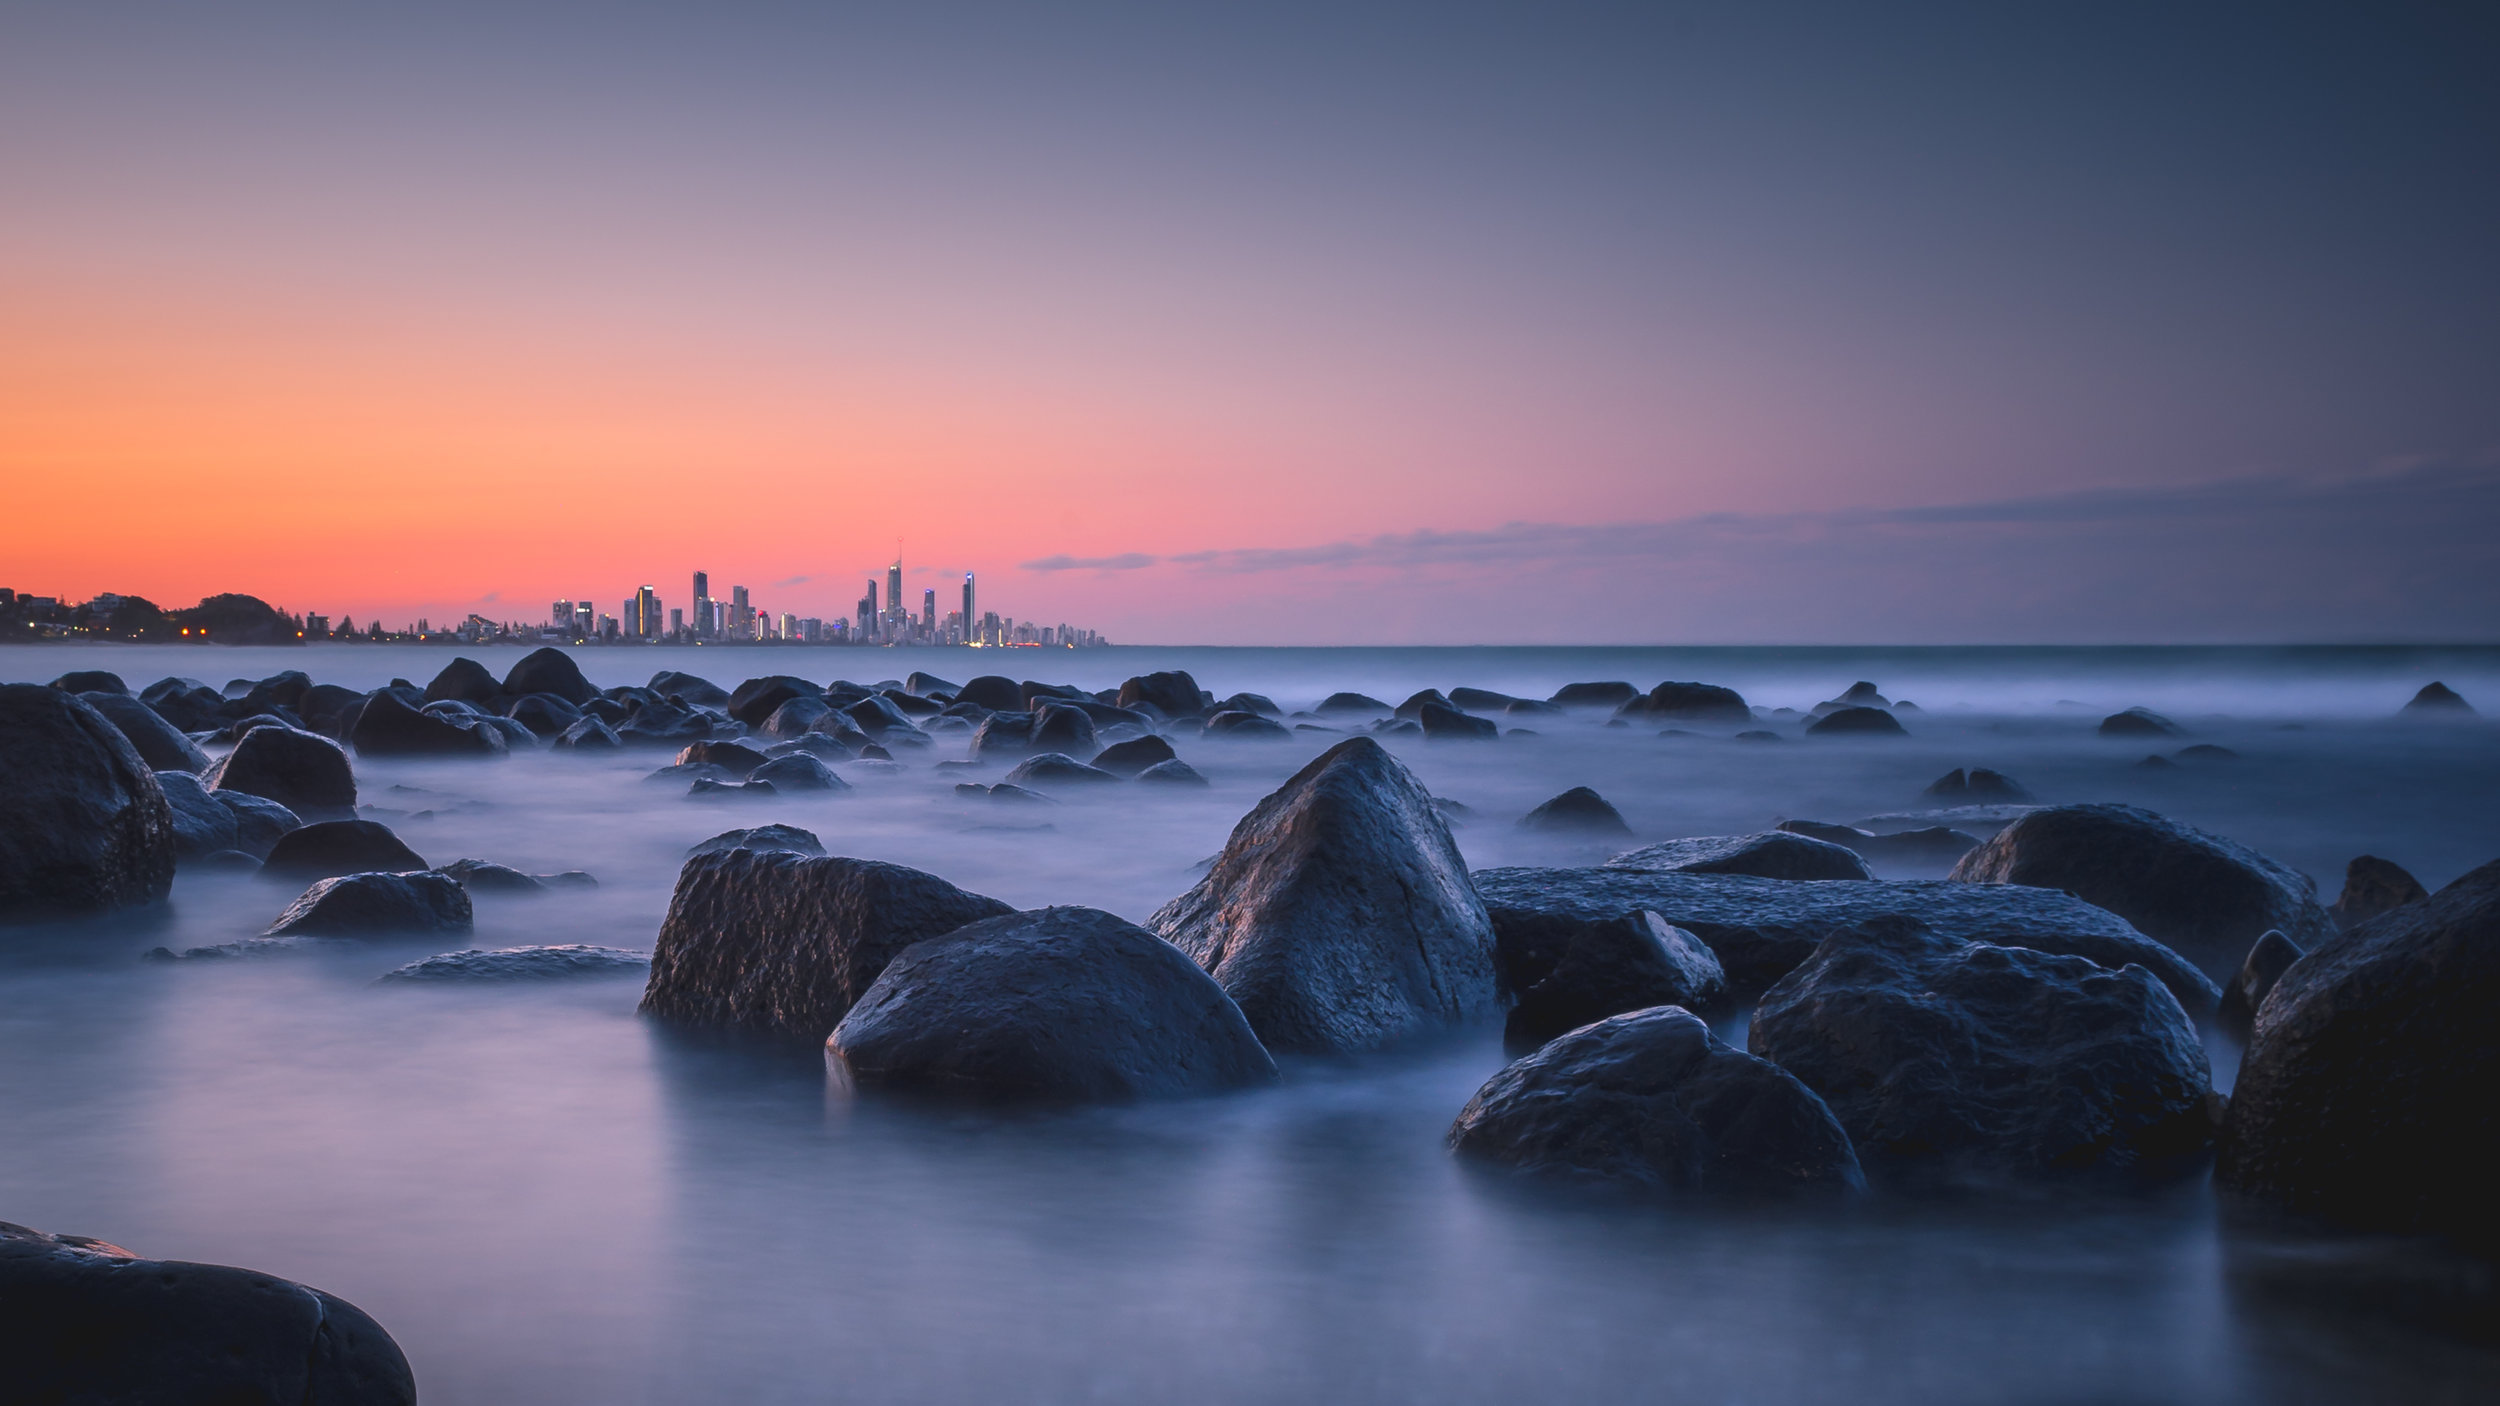 Sunset. Burleigh Heads, Gold Coast #1